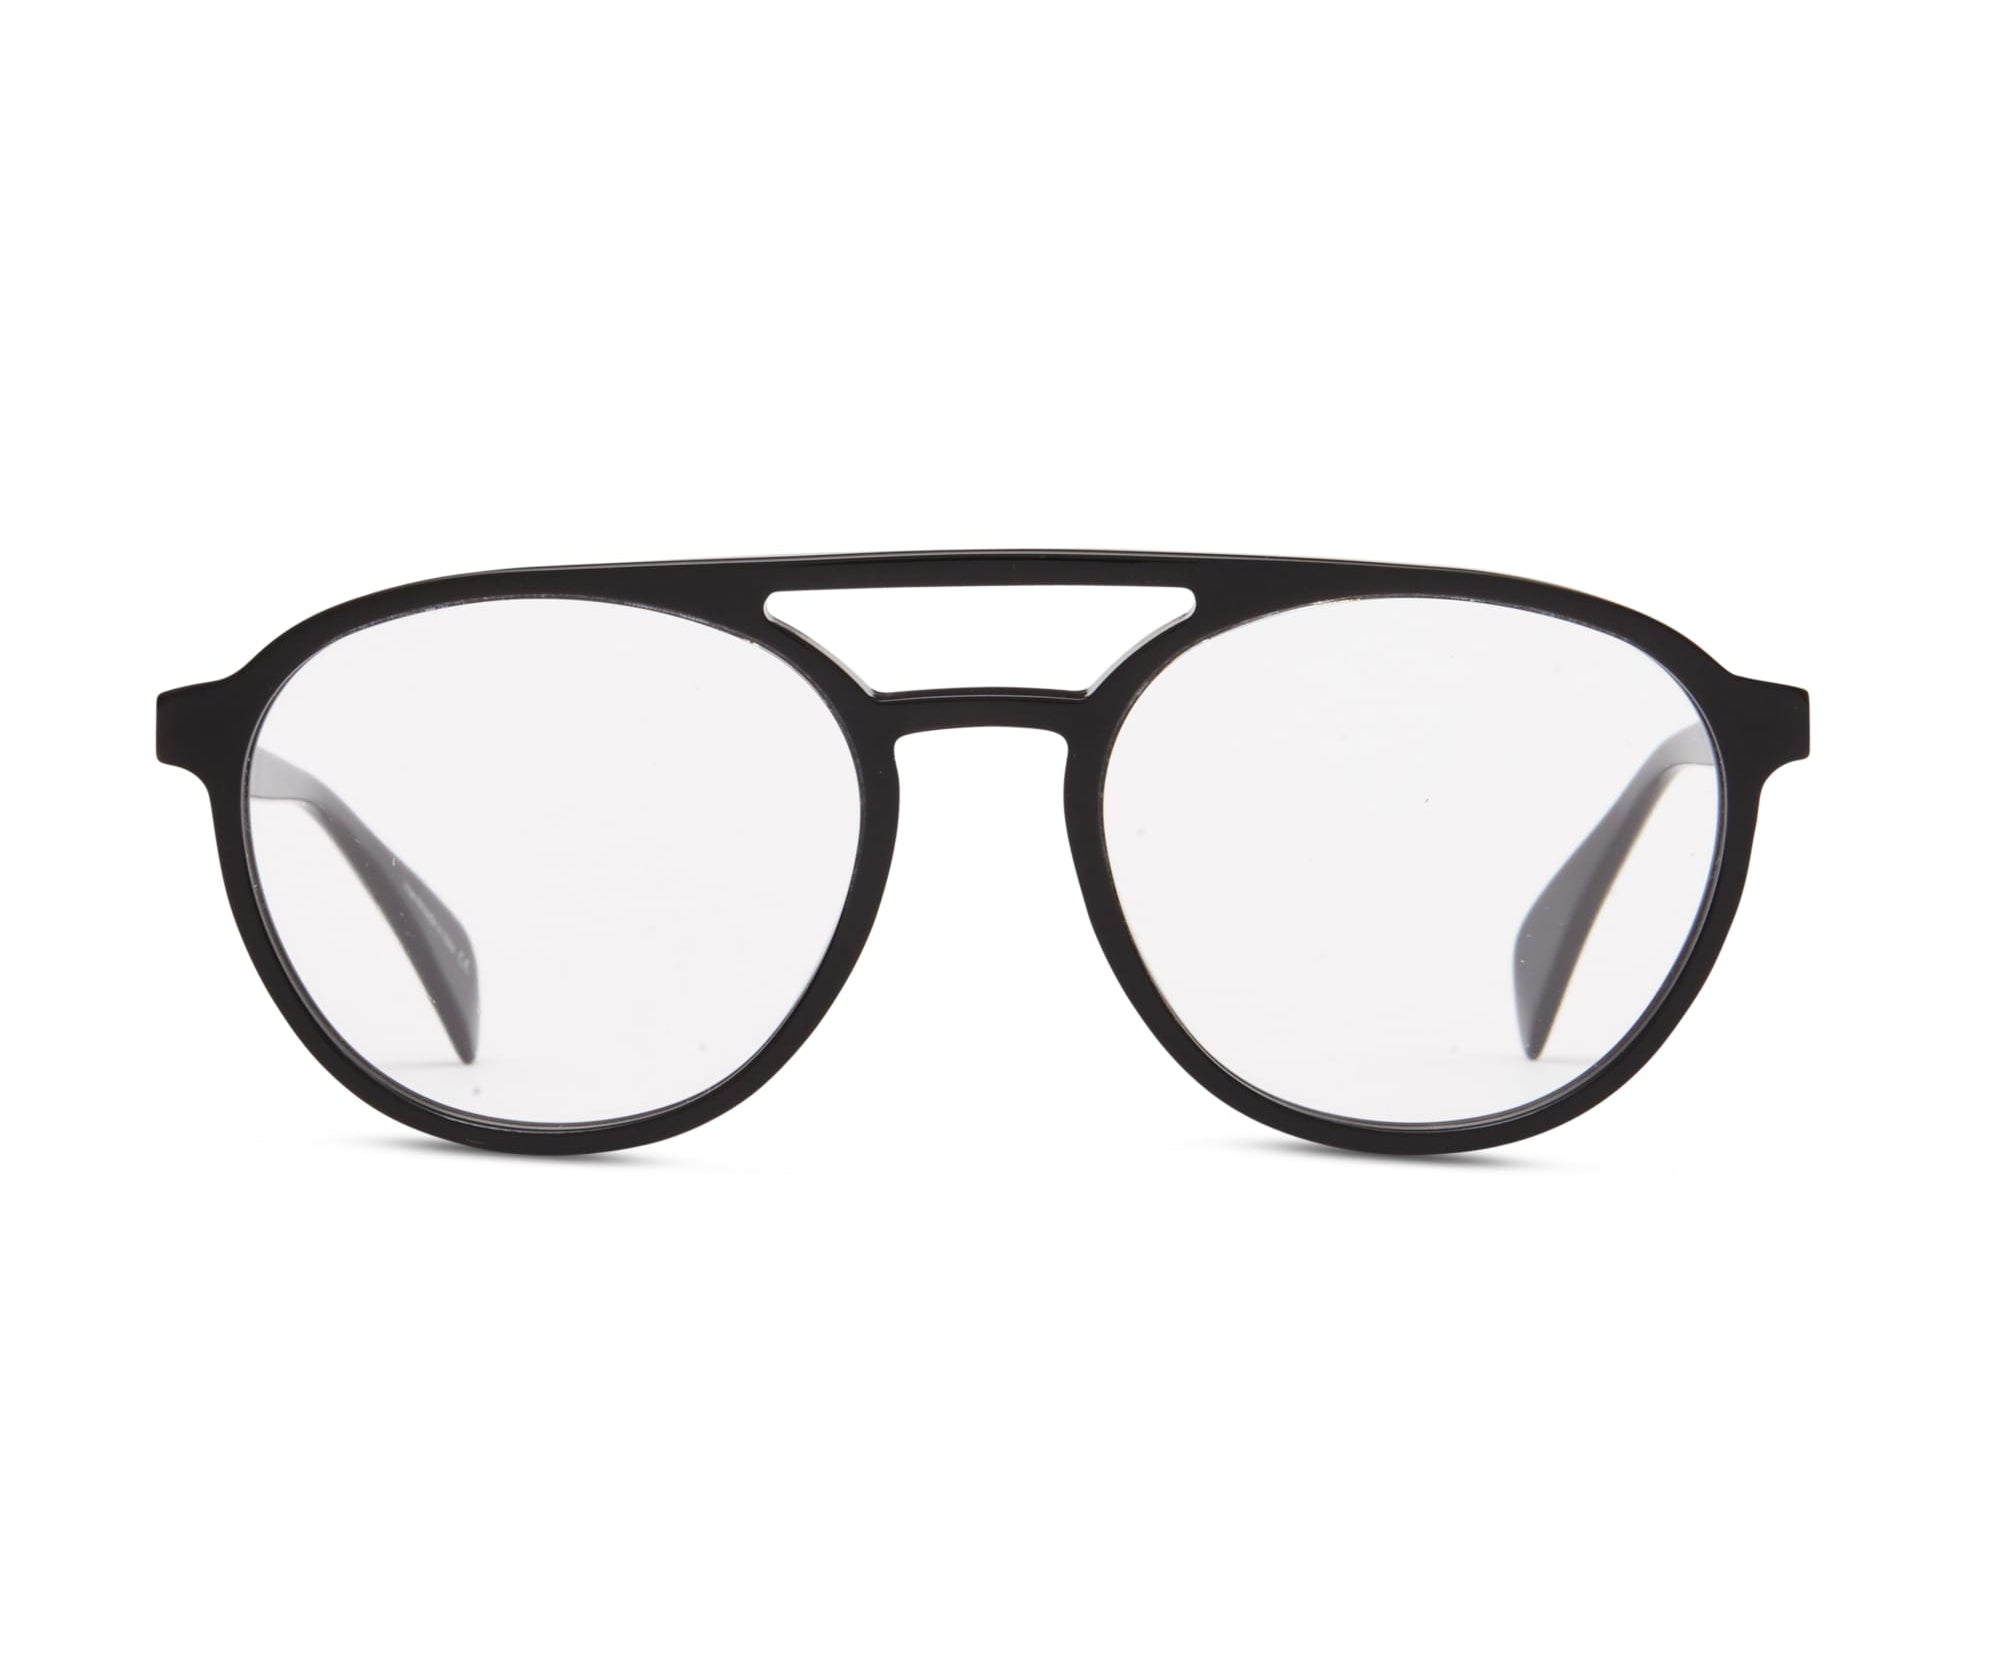 Moko Sunglasses with Black Glass acetate frame